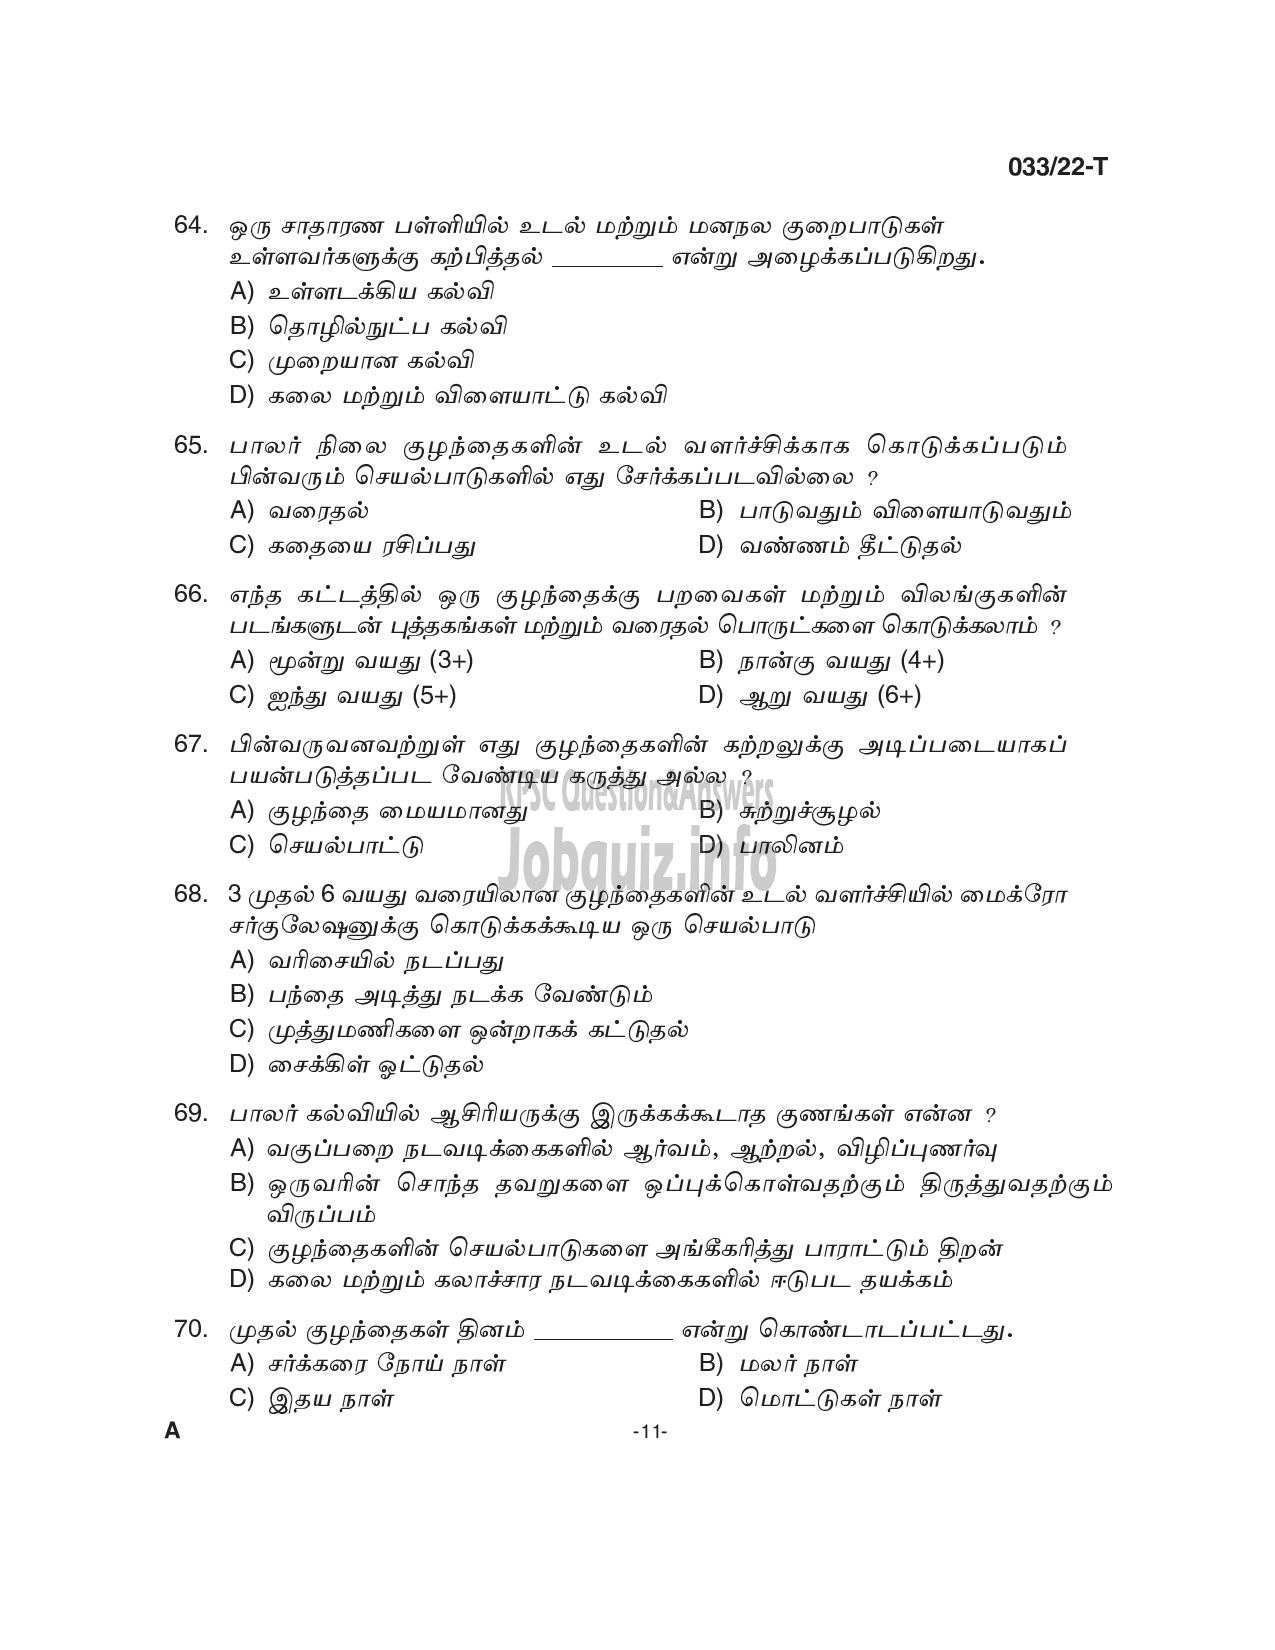 Kerala PSC Question Paper - Pre - Primary Teacher (Pre- Primary School) - Education -11